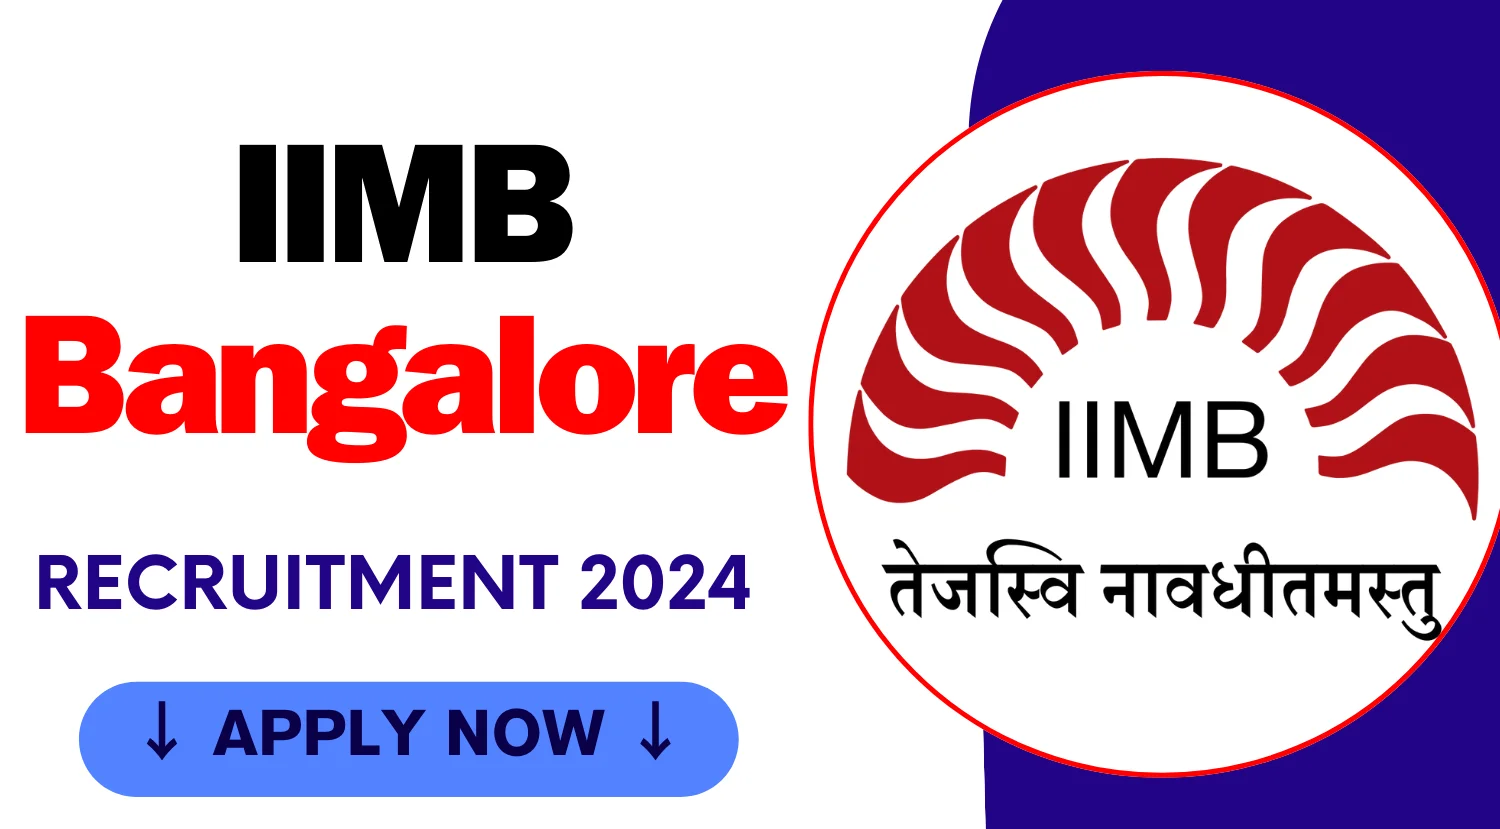 _IIMB Bangalore Recruitment 2024